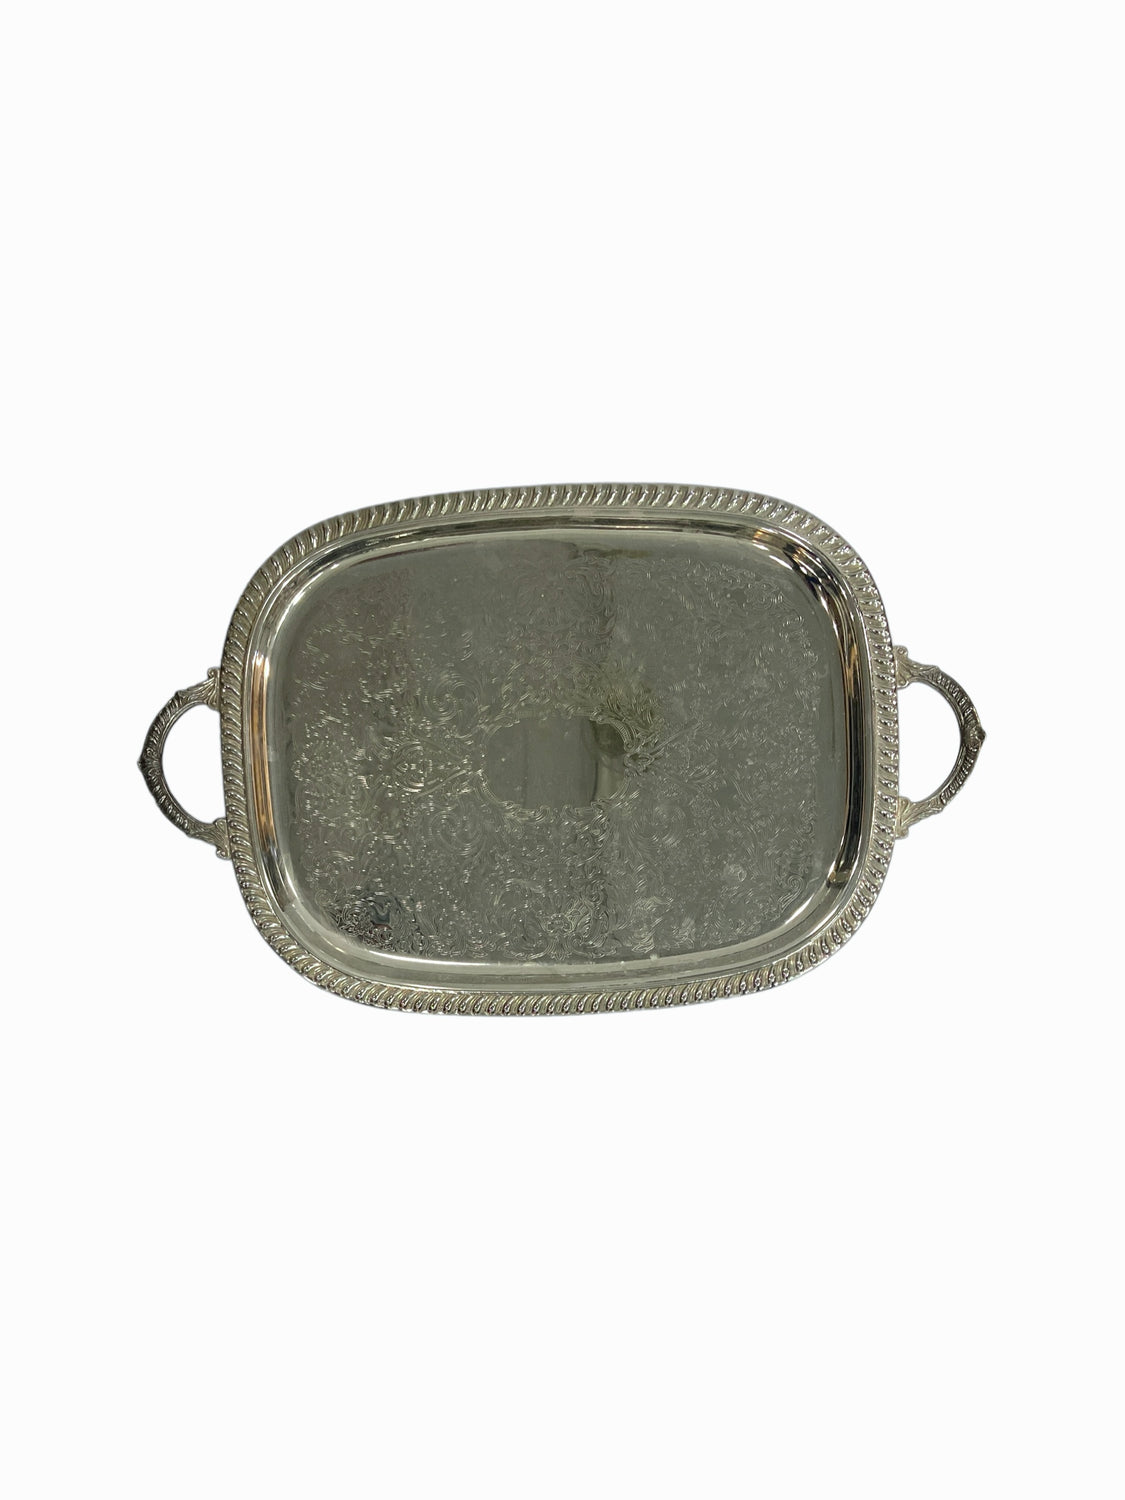 Antique Silver Serving Platter